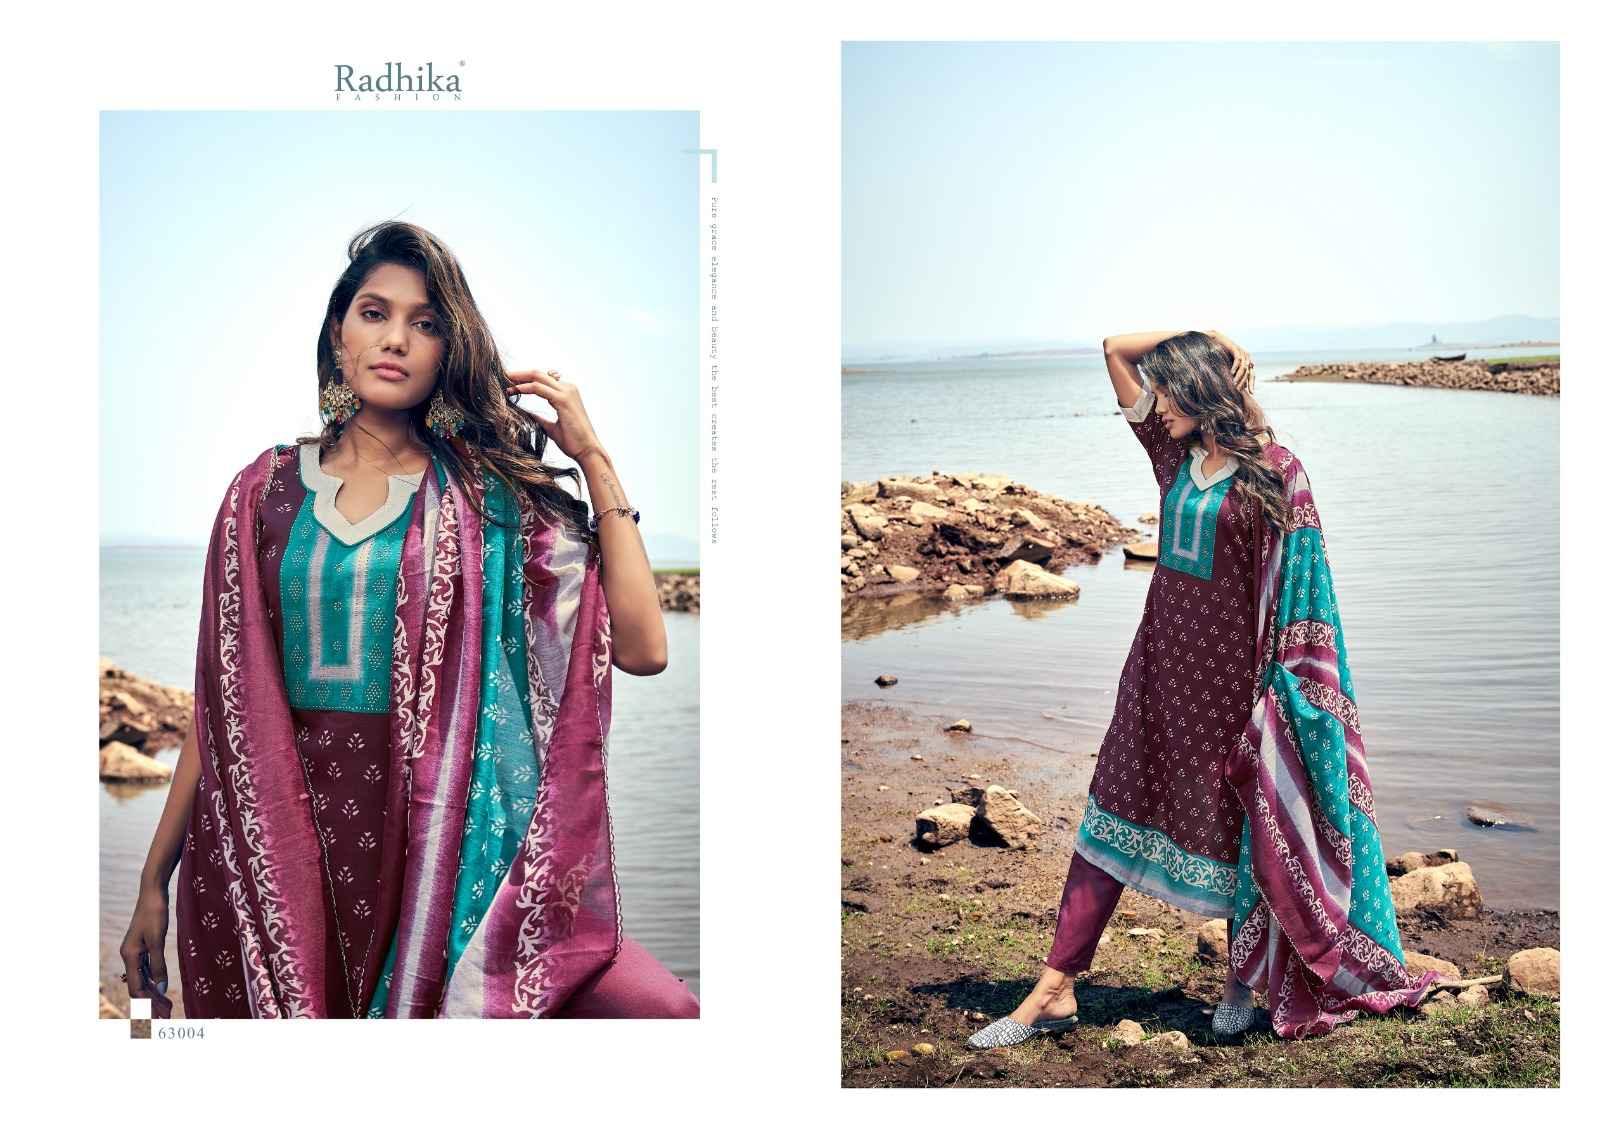 Radhika Azara Jalpari Cotton Dress Material (8 pcs Catalogue)